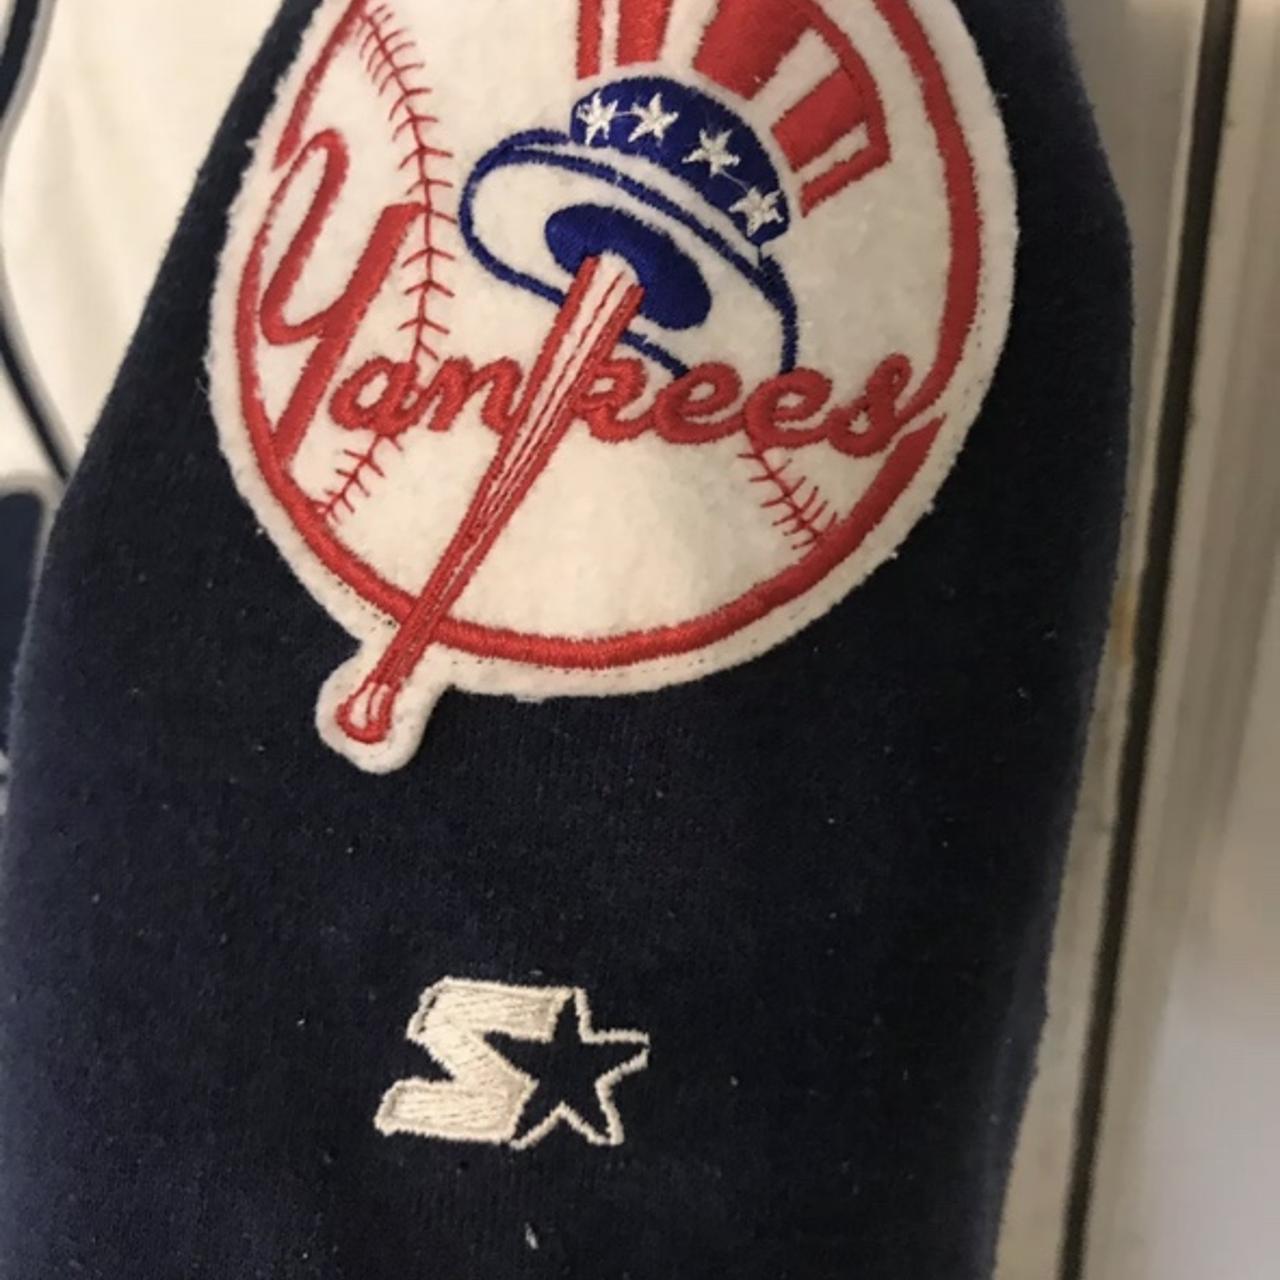 Yankees Starter Script Jersey sz M – First Team Vintage